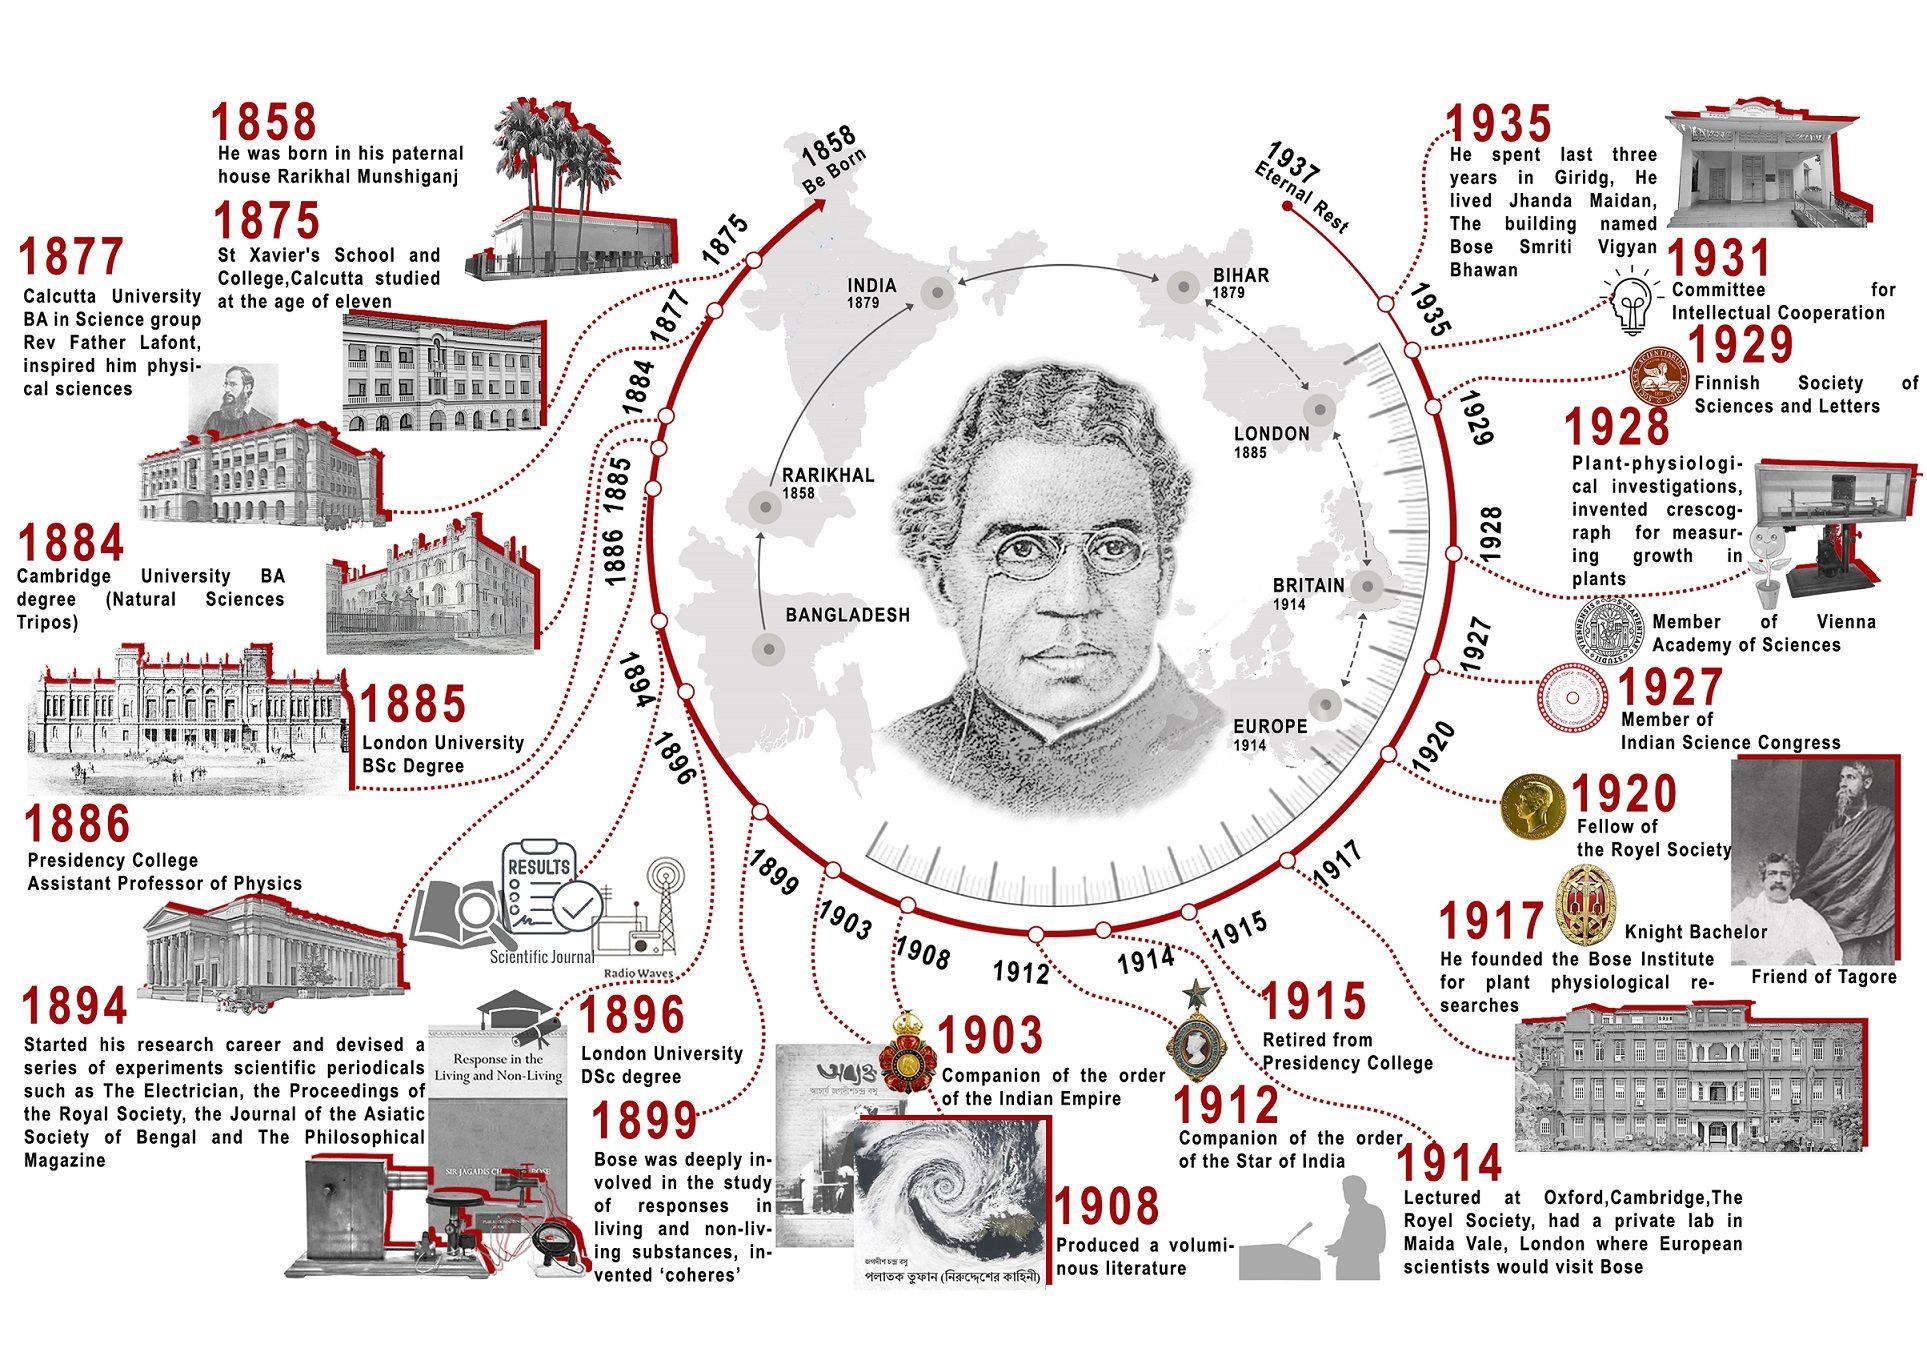 2 Sir Jagadish Chandra Bose Chronology